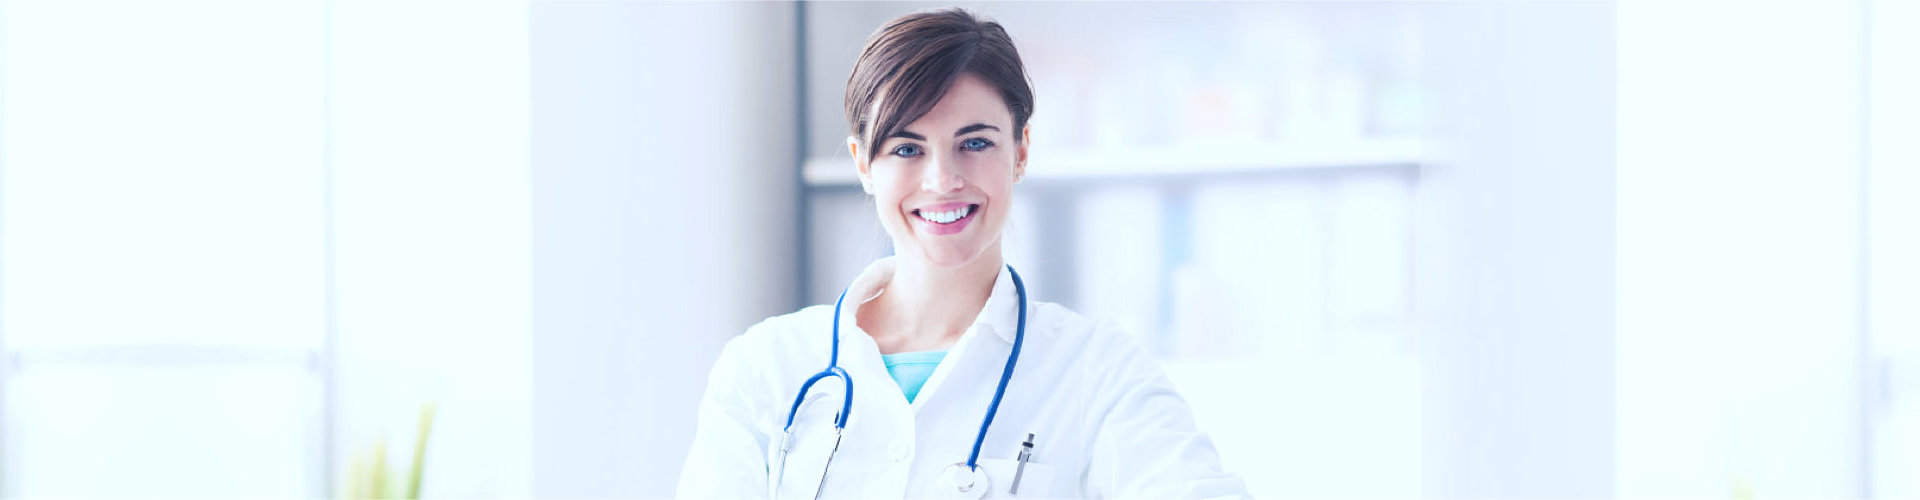 female doctor wearing stethoscope smiling